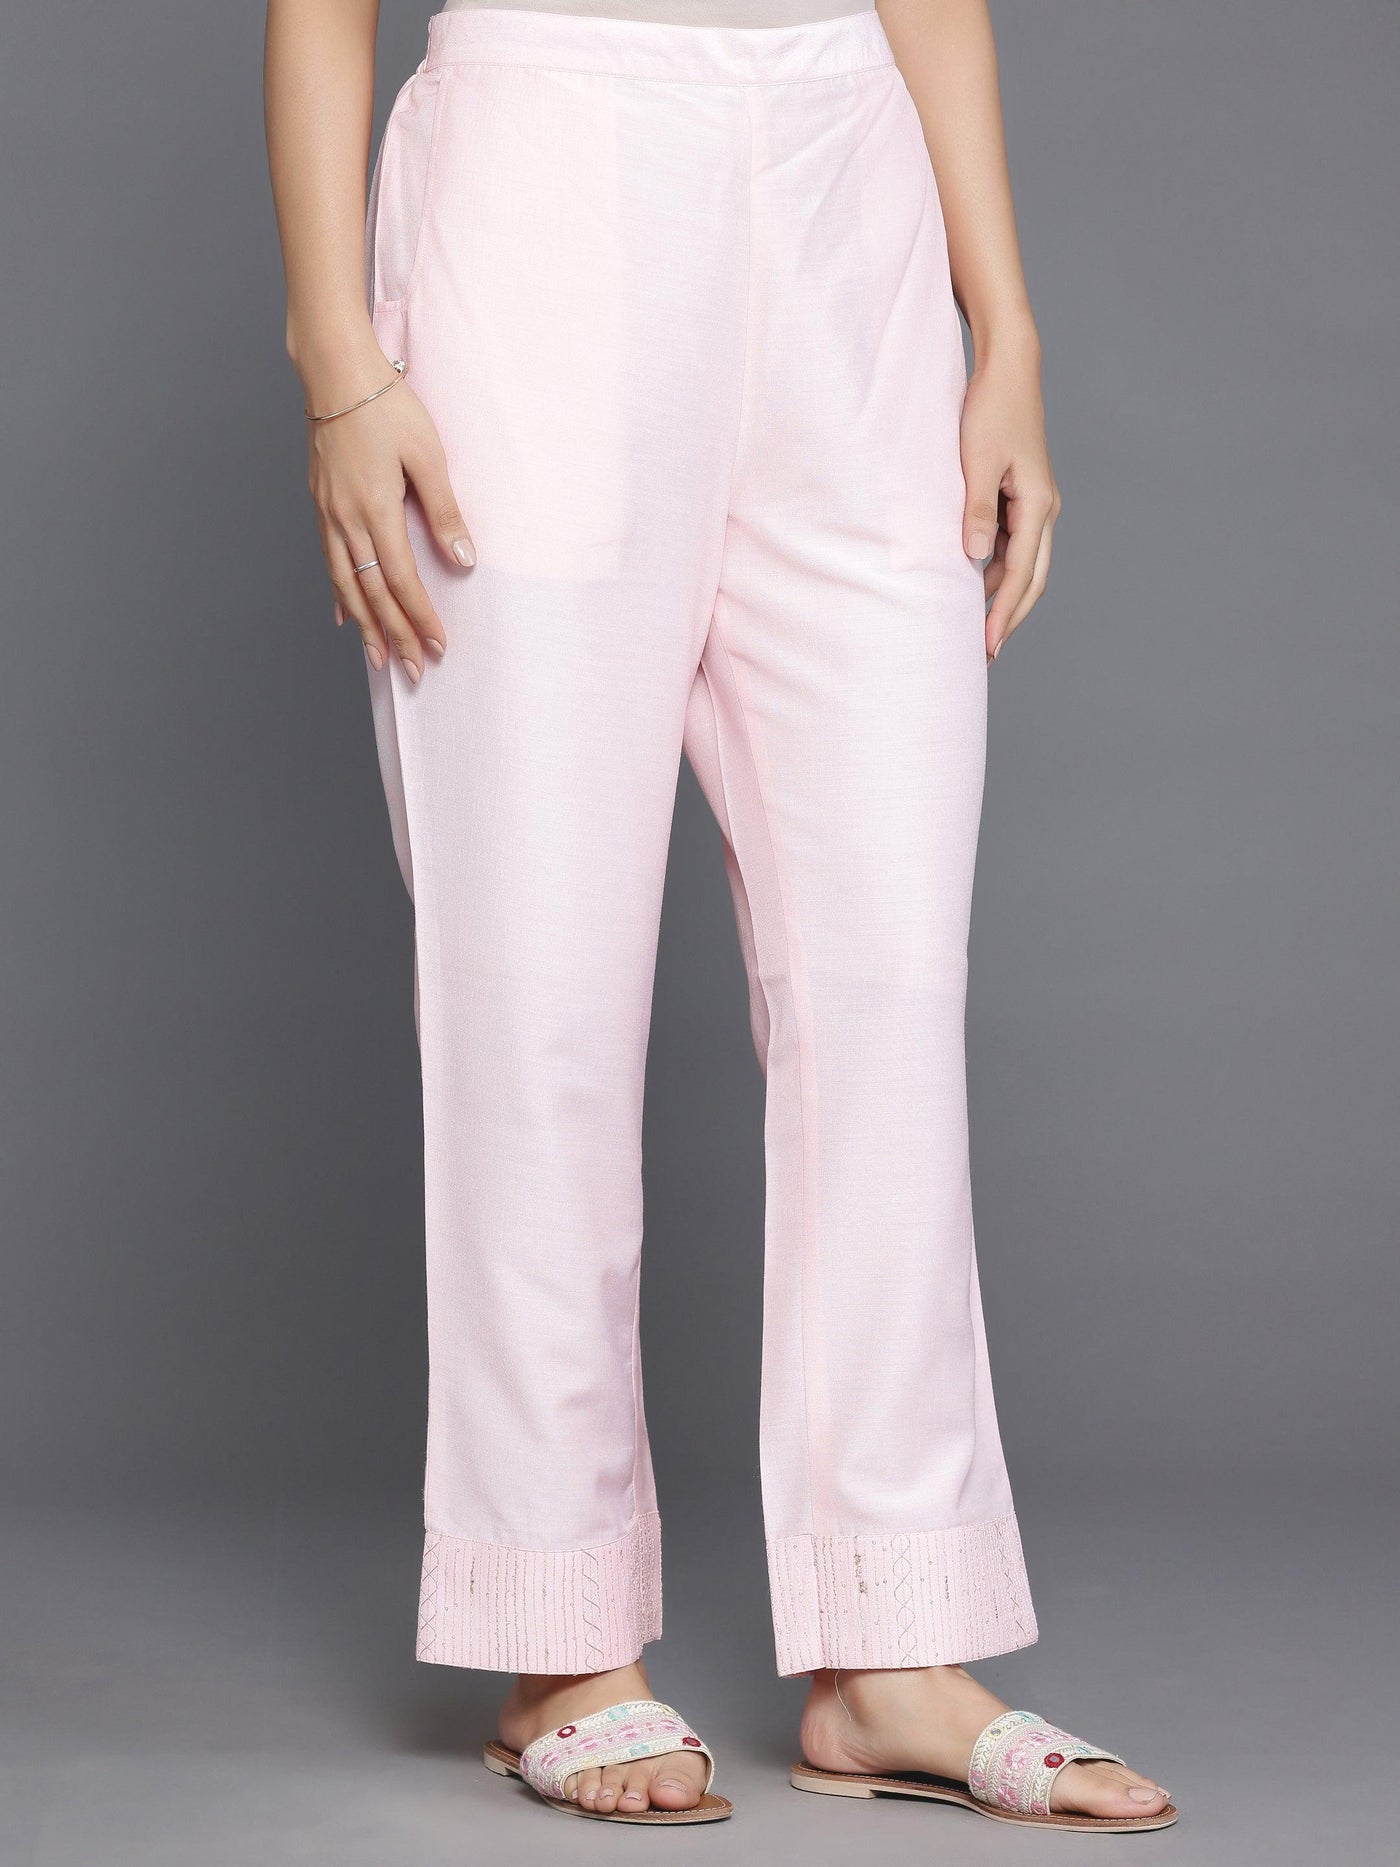 Peach Self Design Silk Blend Straight Suit With Dupatta - Libas